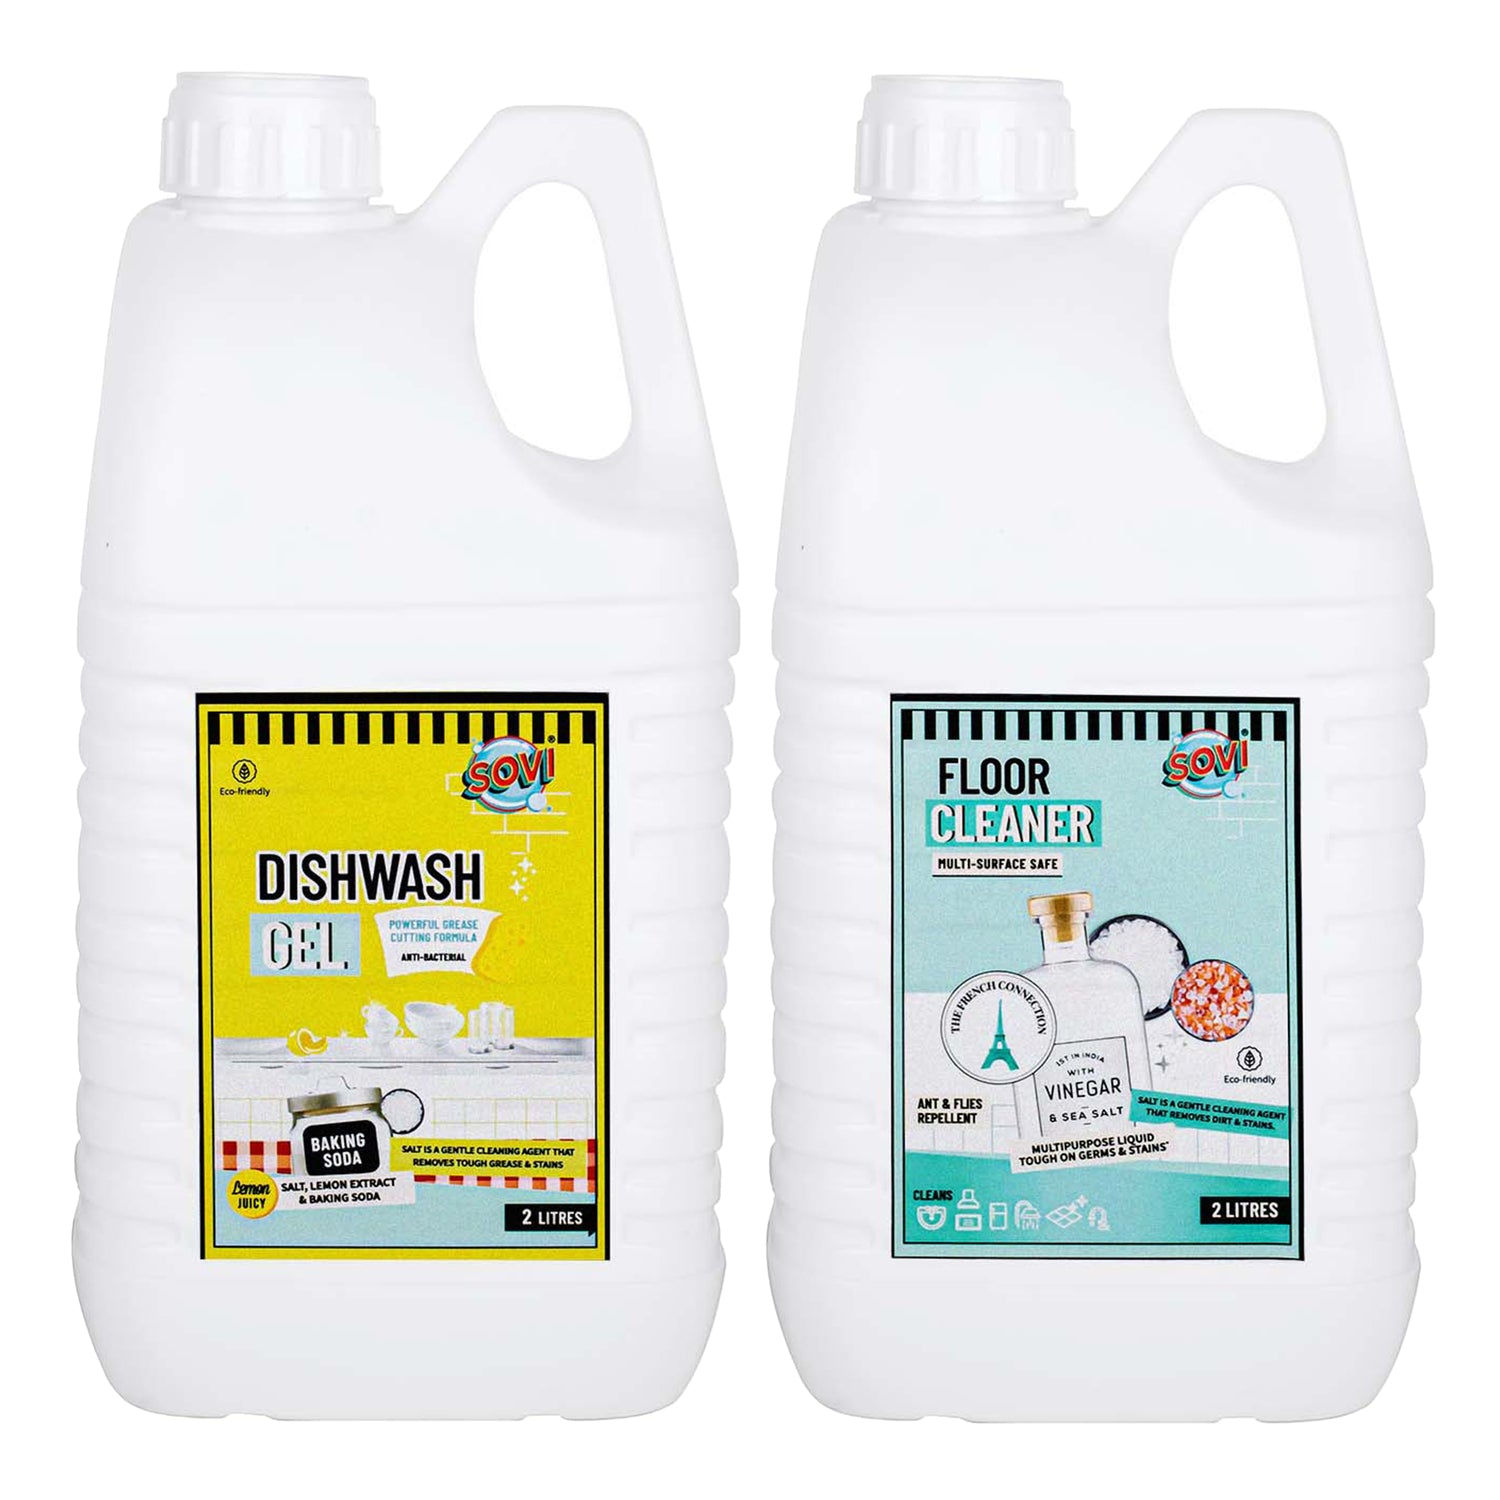 SOVI® Dishwash Liquid Gel 2 Liters, Pack of 2.